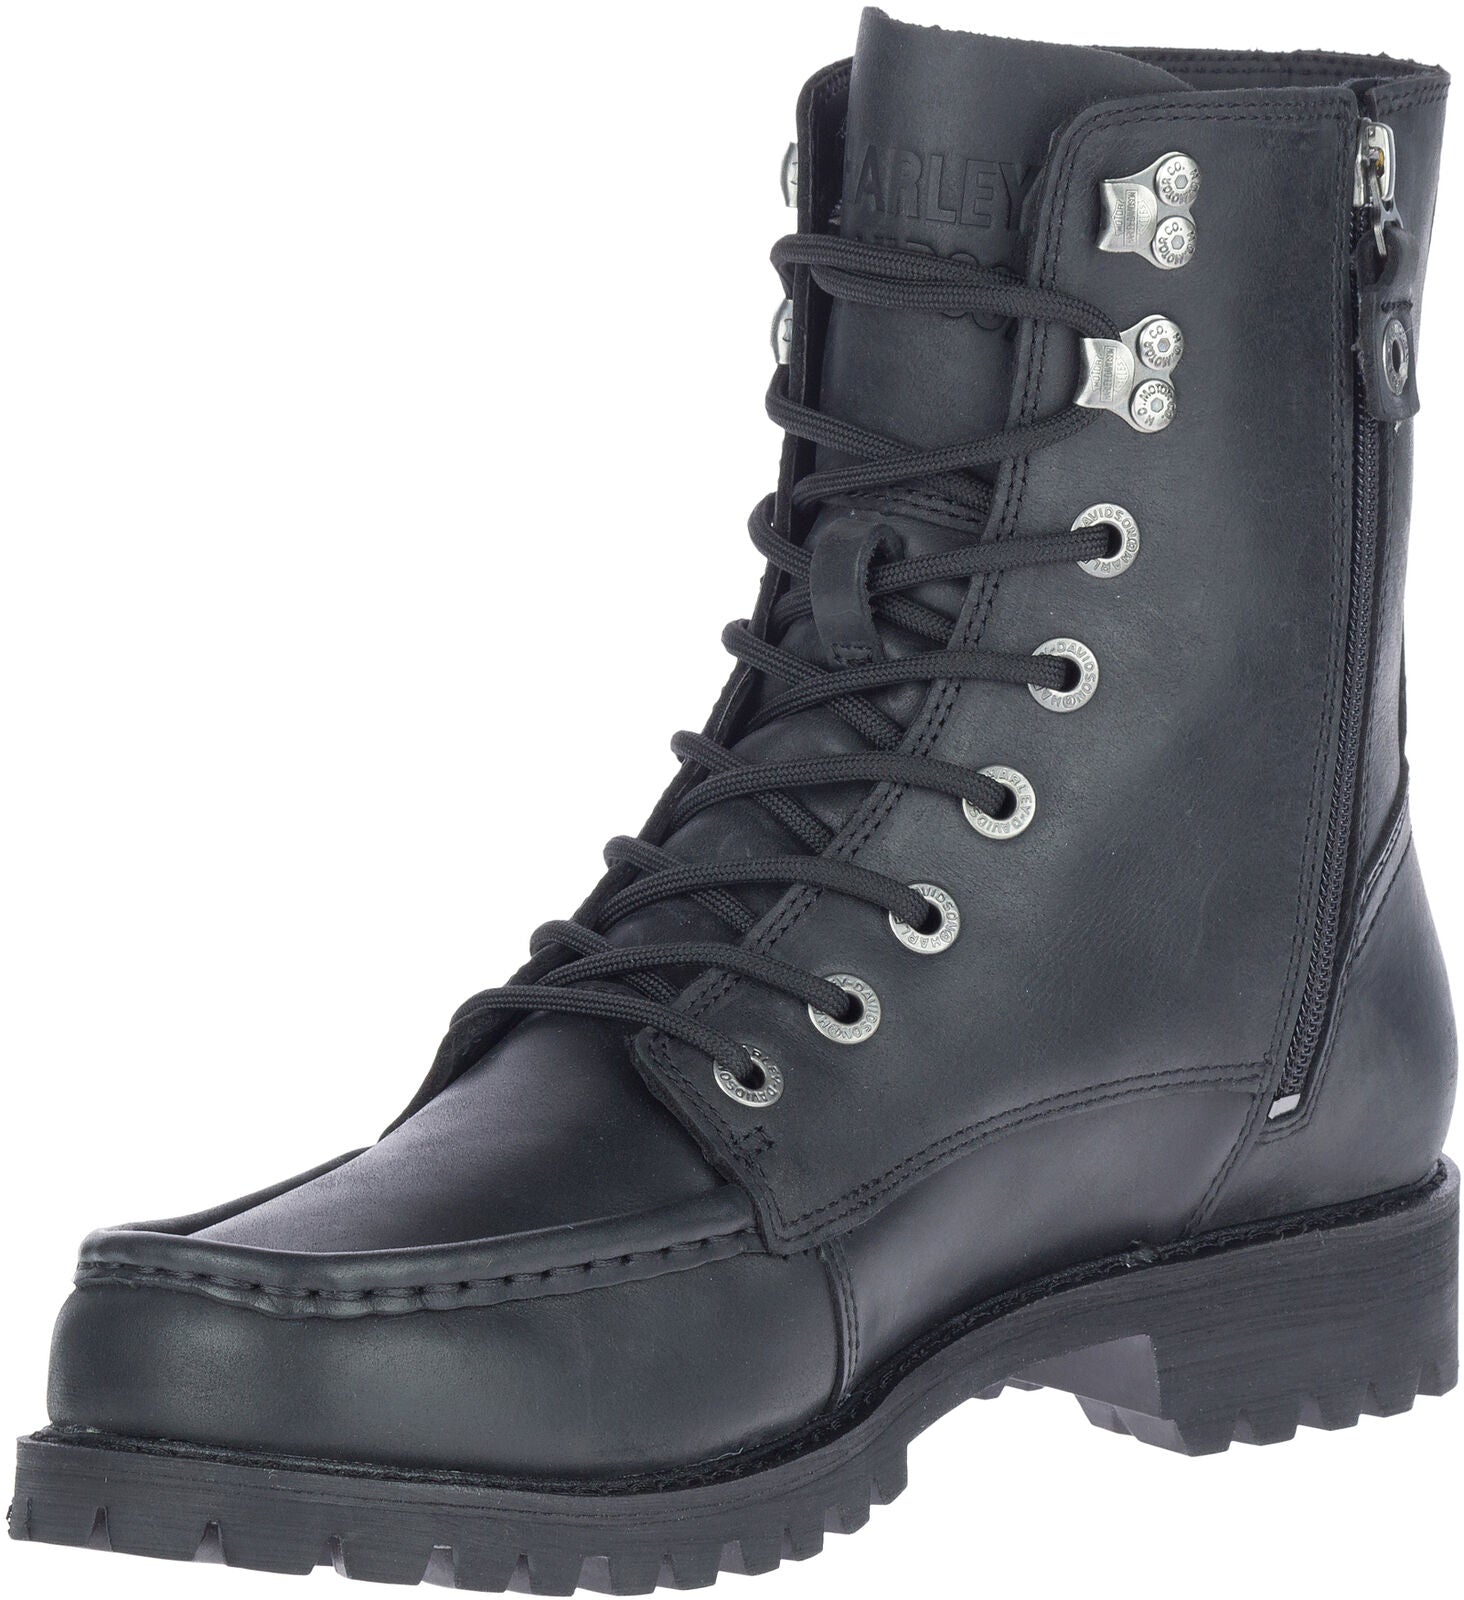 Men's Boot - Brentmore by Harley Davidson®